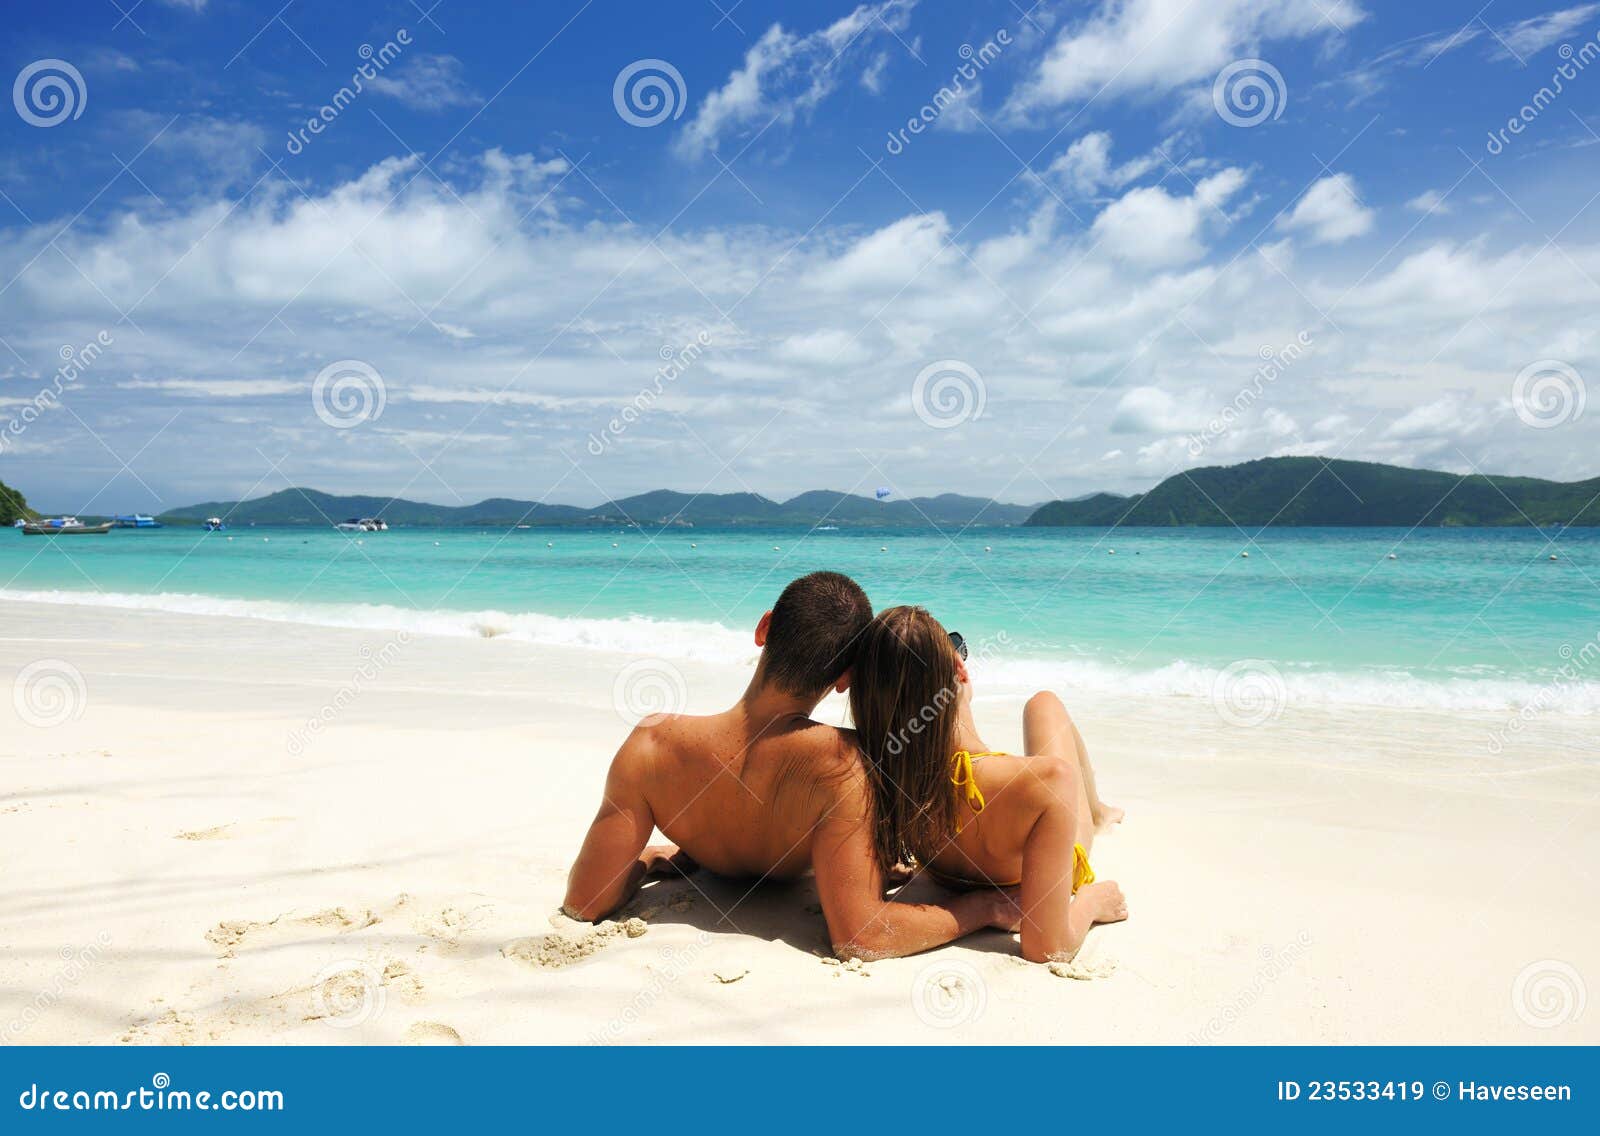 Couple thailand vacation threesome